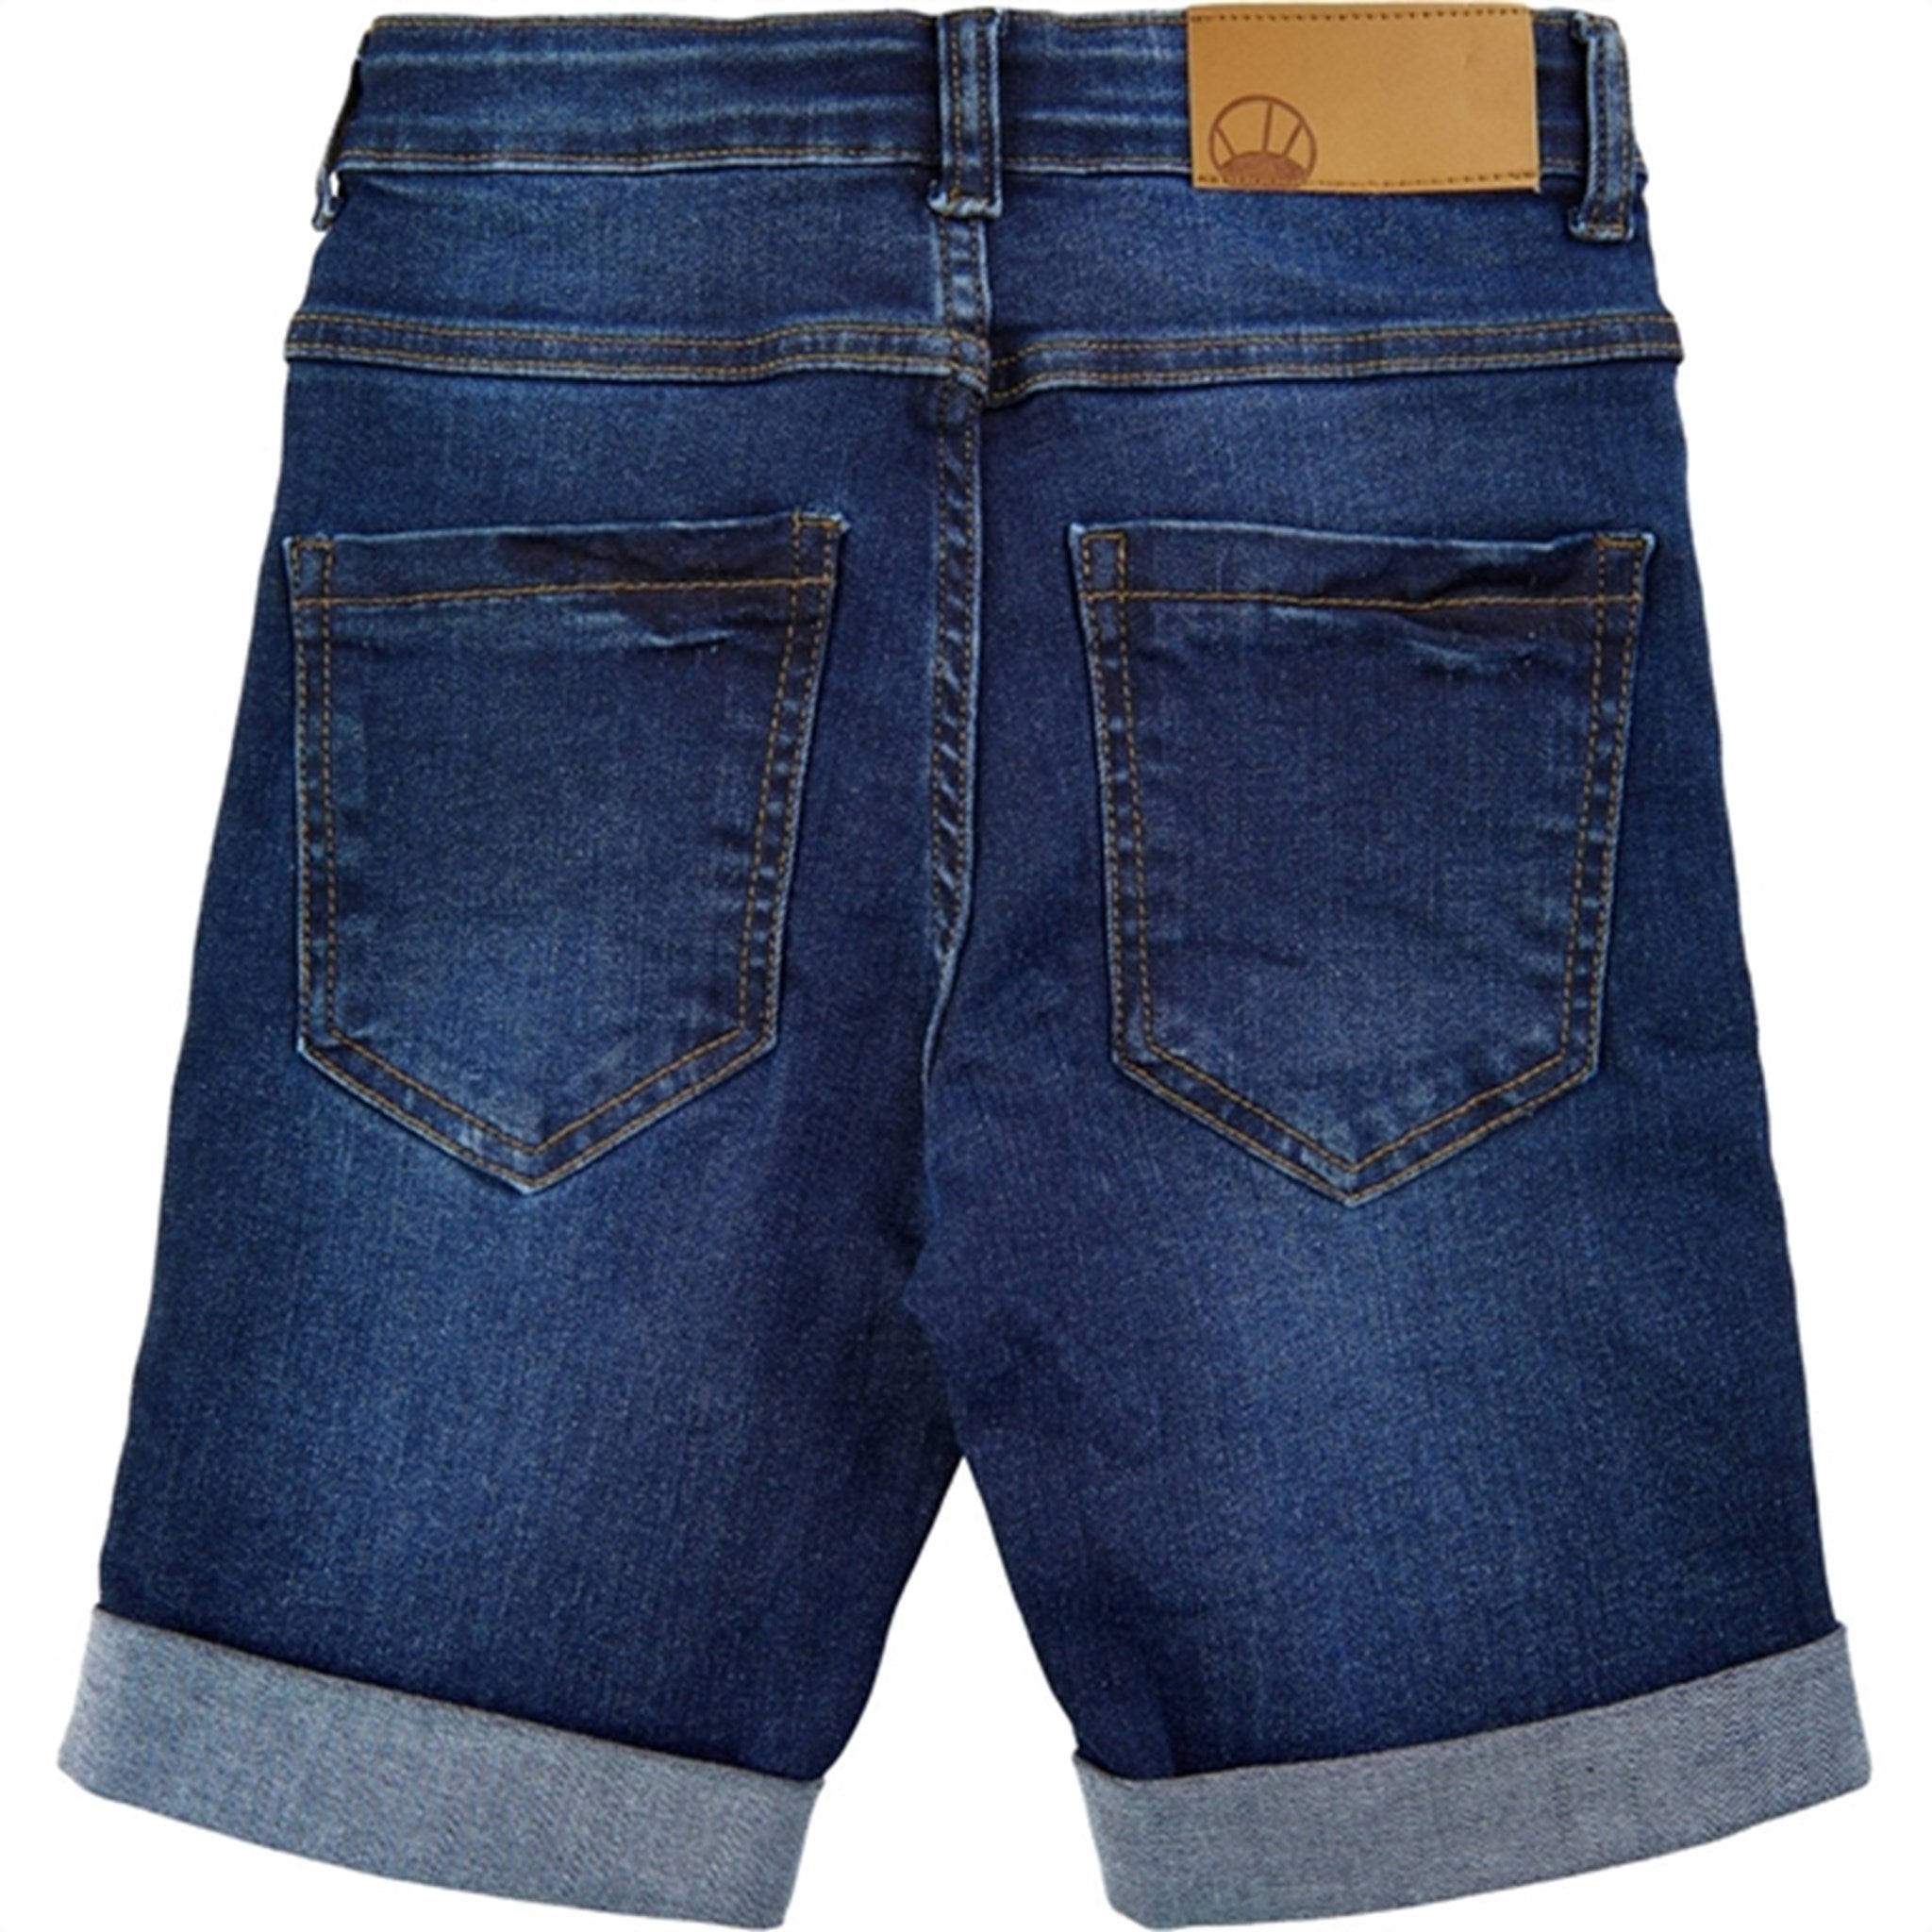 THE NEW 890 Dark Blue Denim Shorts 3